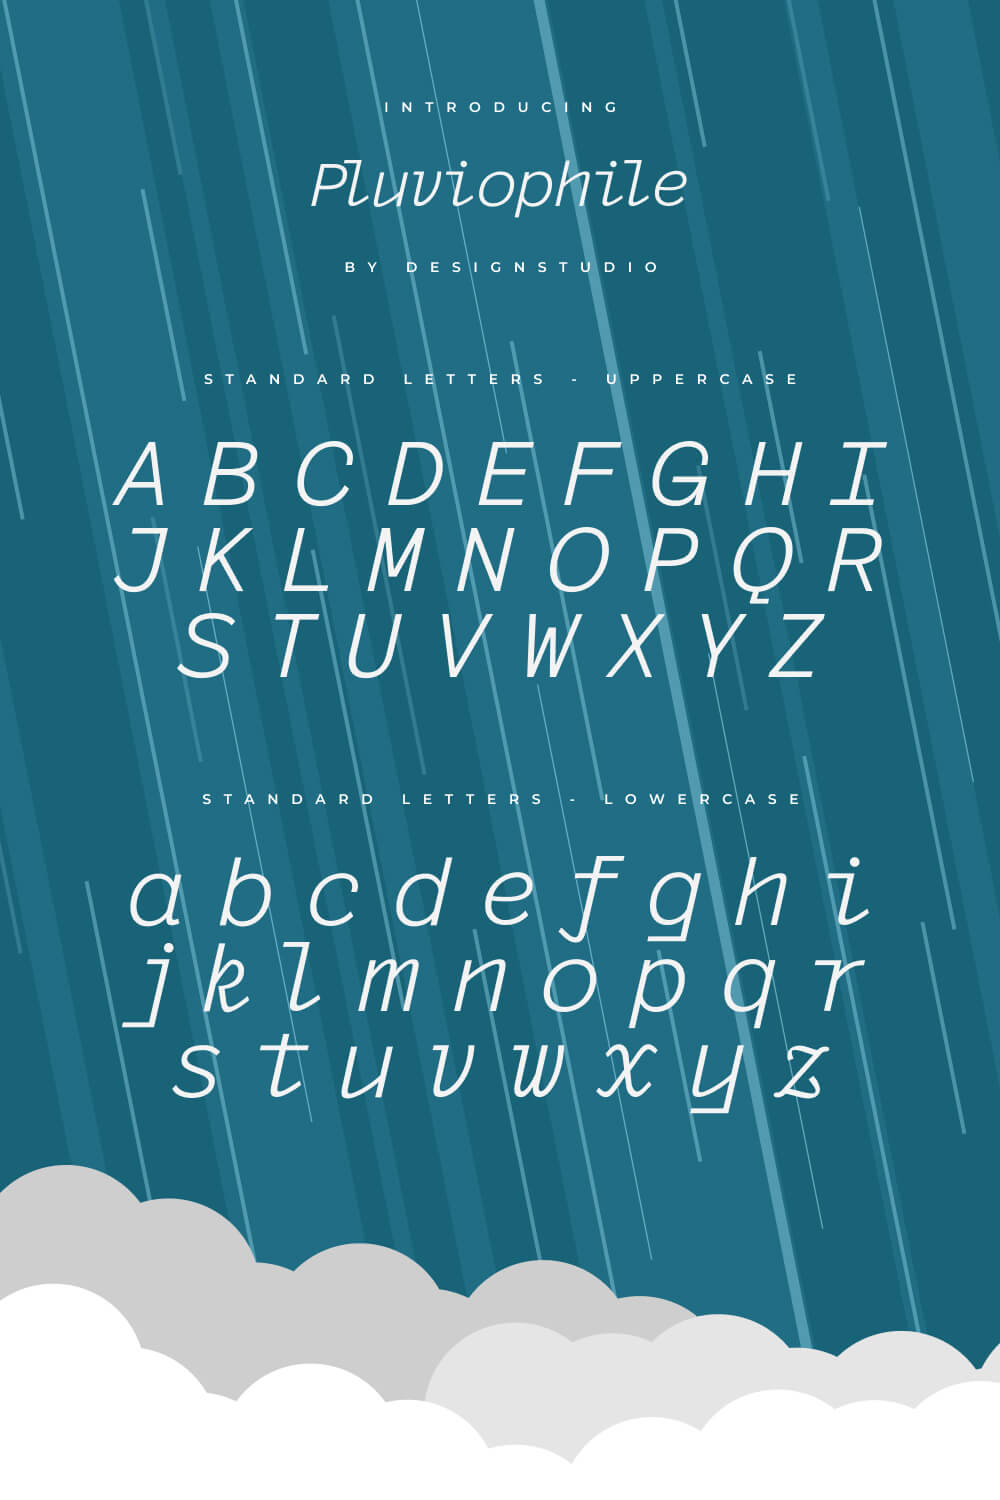 Pluviophile Serif Monospaced Font pinterest image.